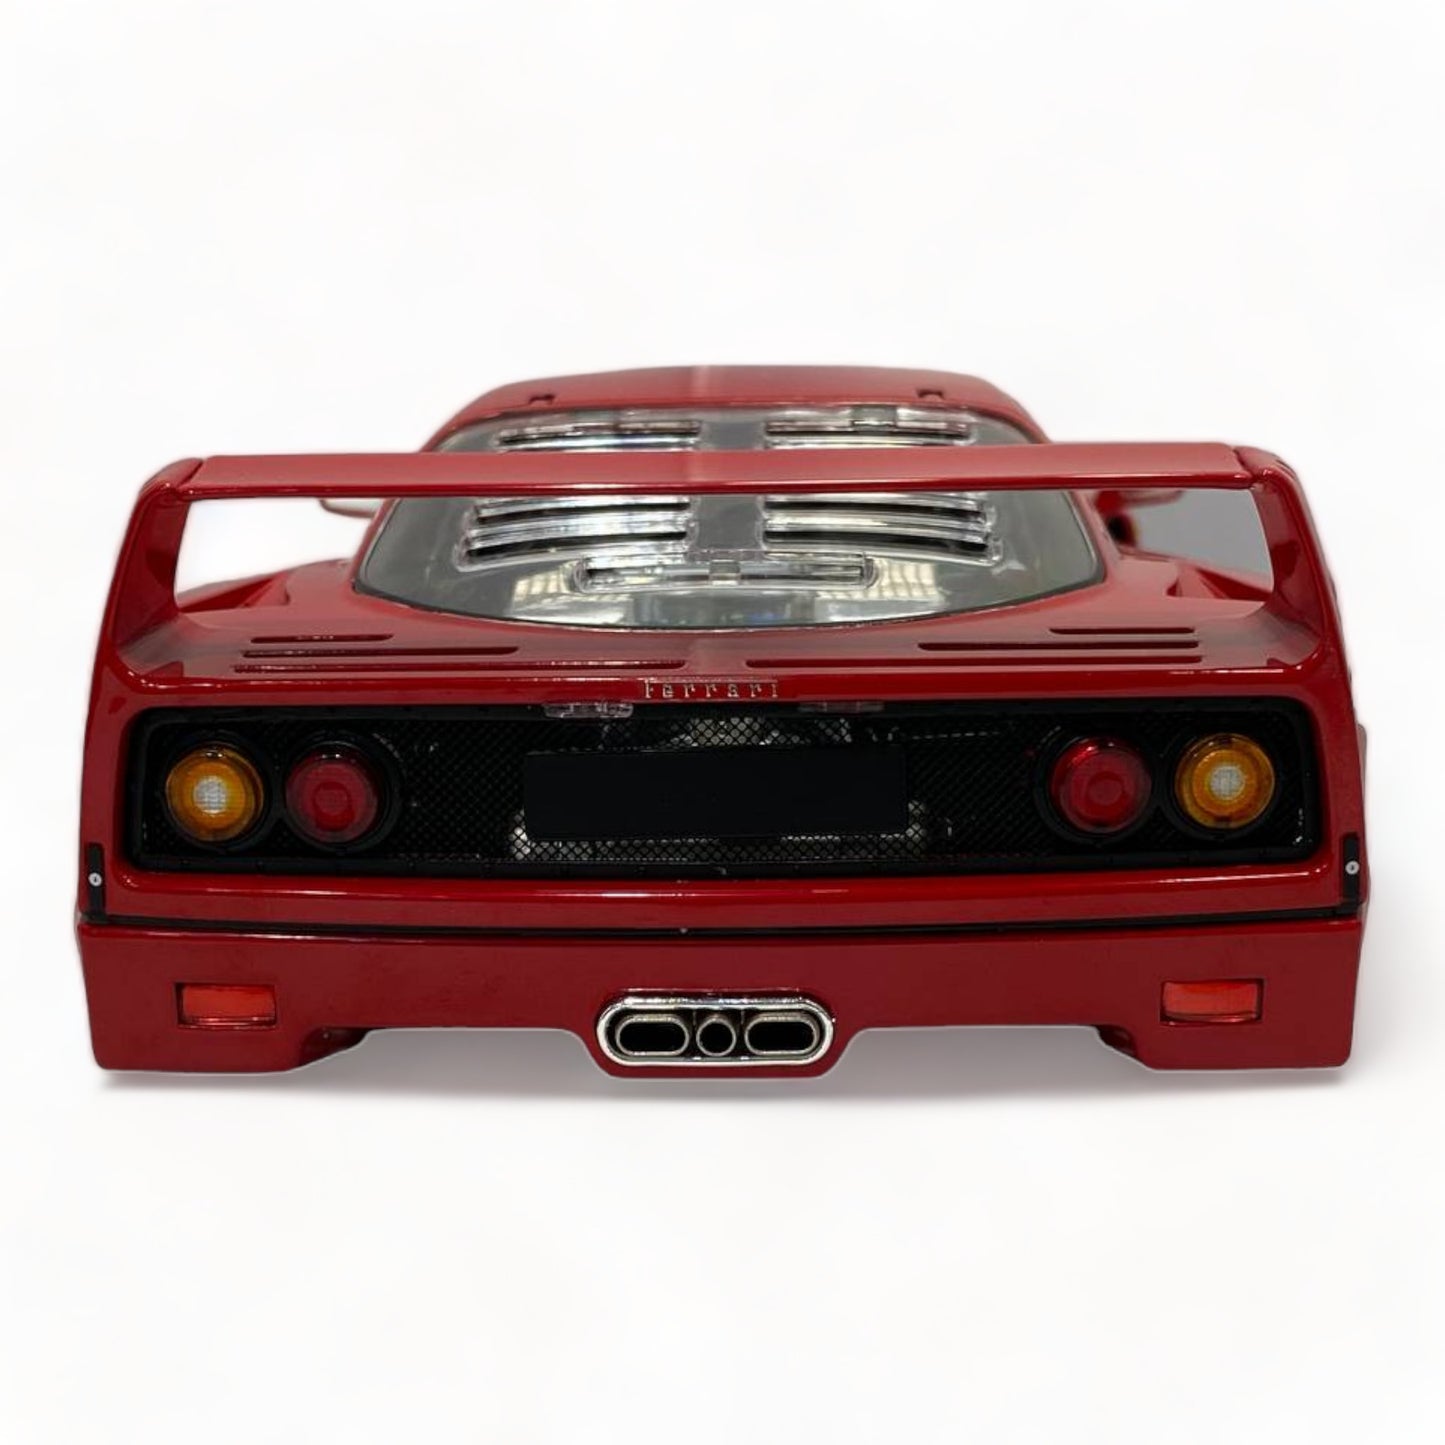 1/18 Diecast Ferrari F40 Red by Kyosho Scale Model Car|Sold in Dturman.com Dubai UAE.